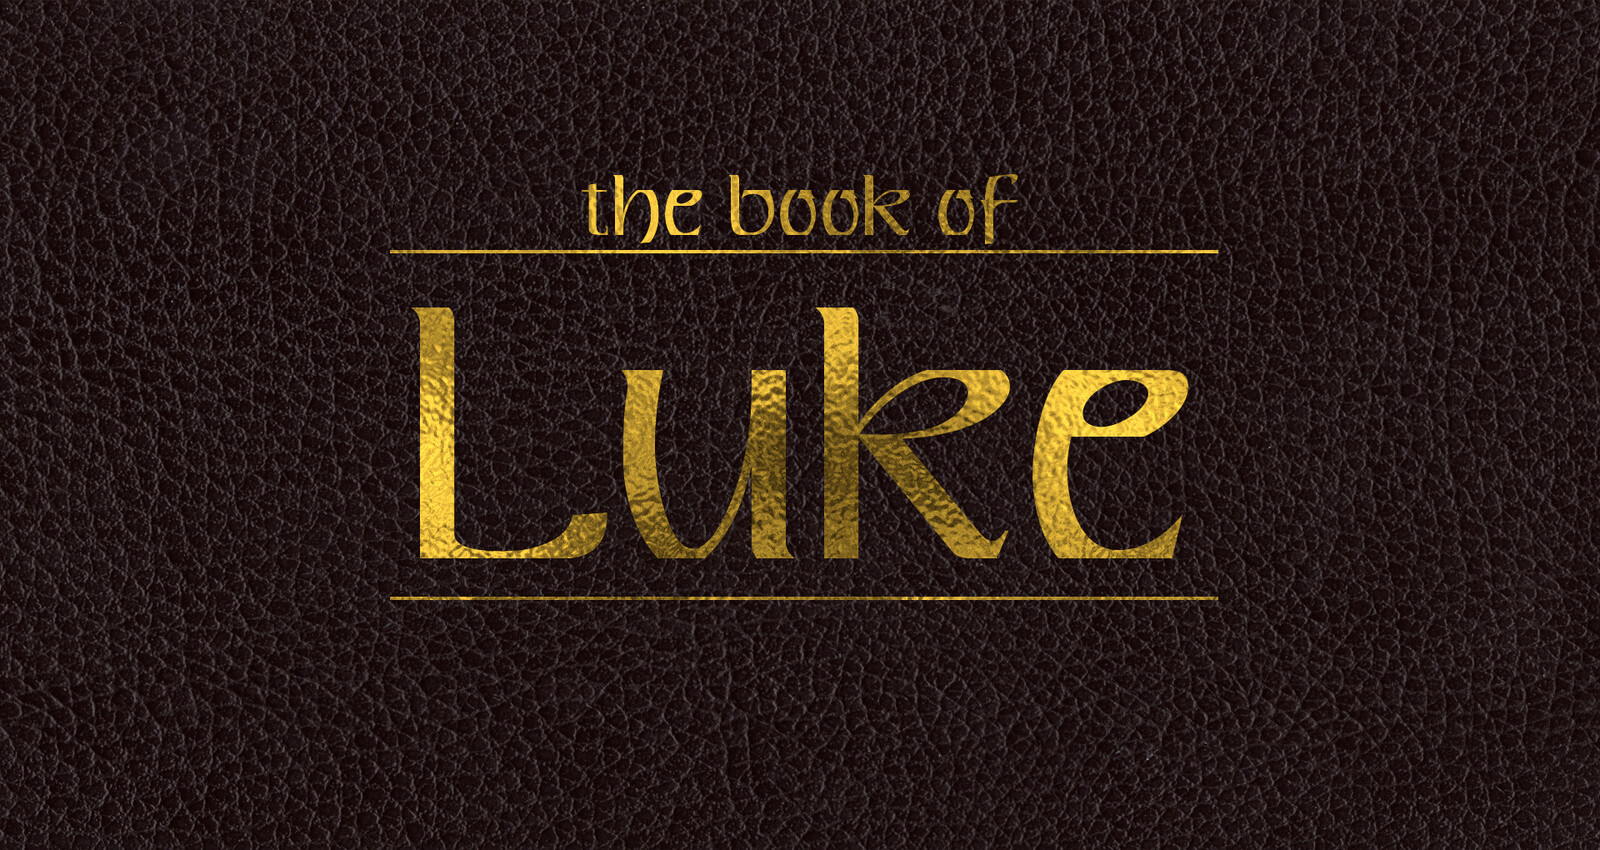 The book of Luke idea.